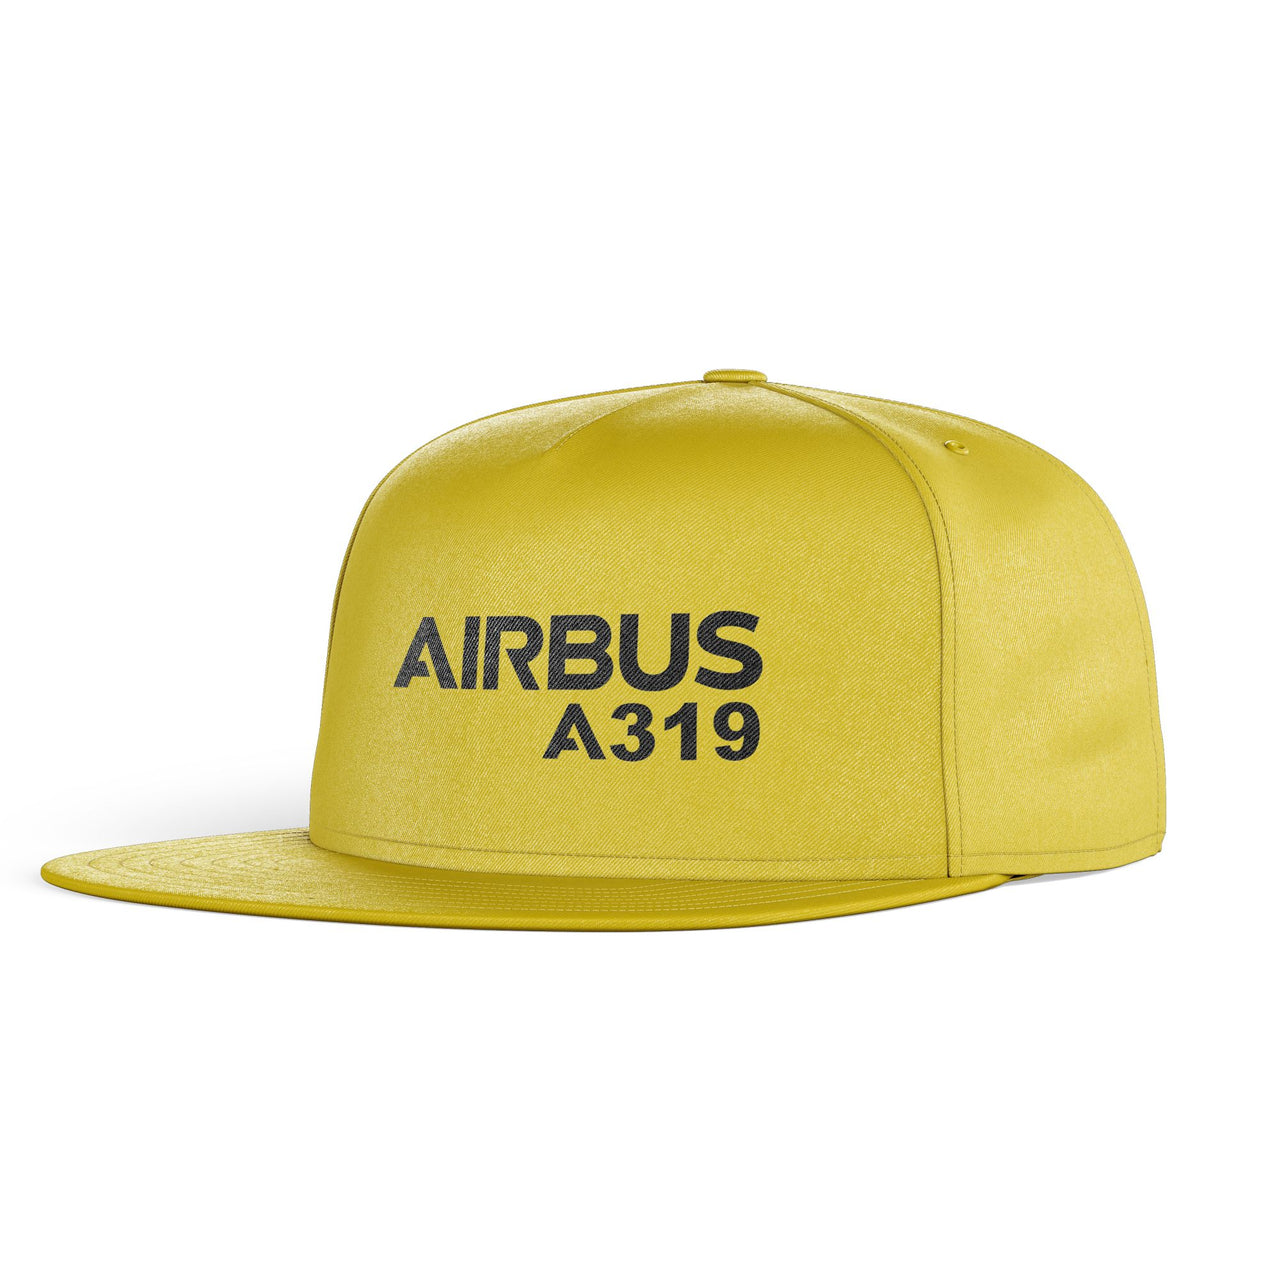 Airbus A319 & Text Designed Snapback Caps & Hats